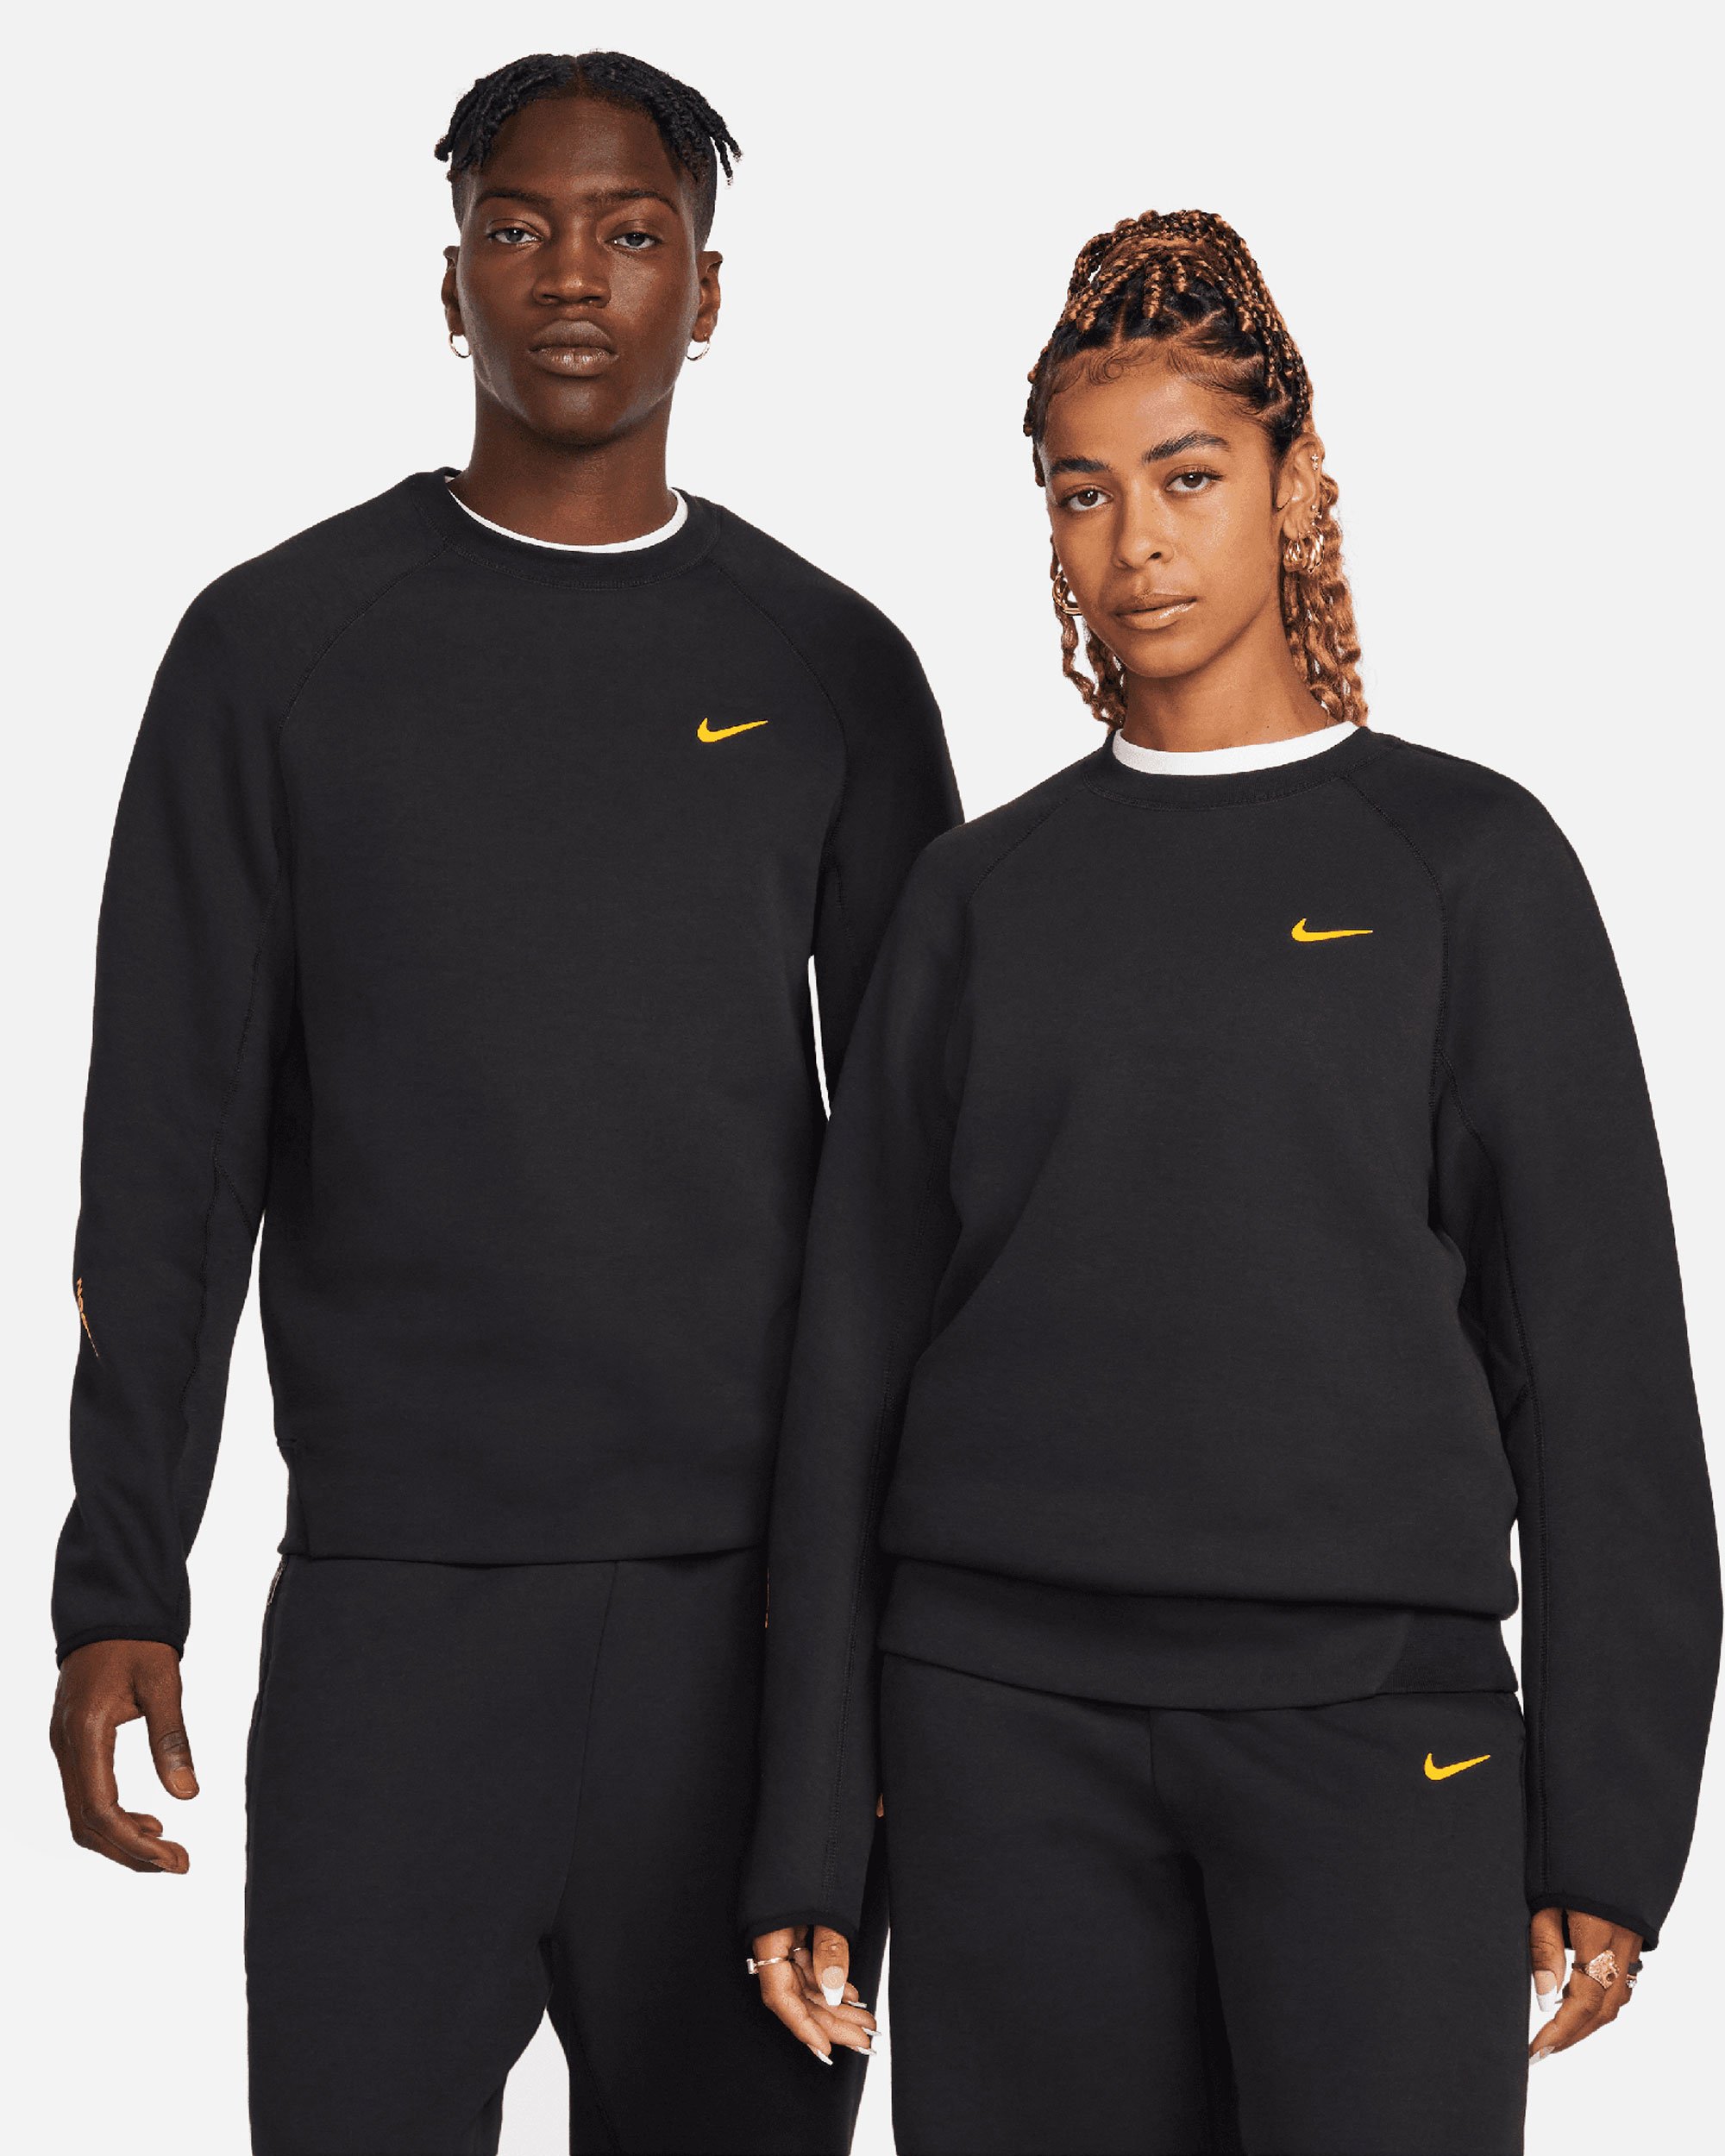 Nike x Drake NOCTA Unisex Tech Fleece Sweatshirt Black FD8457-010| Buy ...